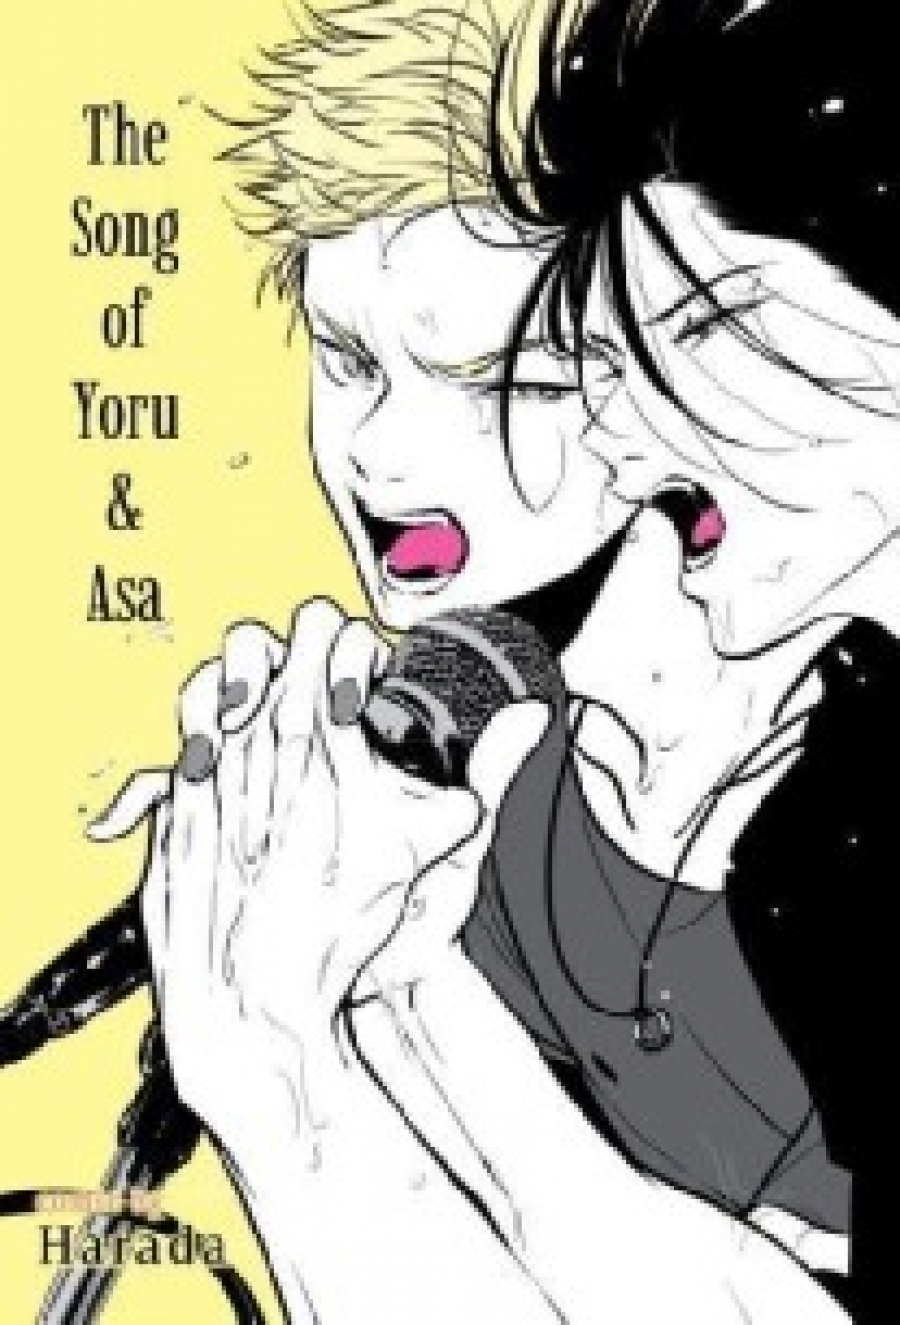 Harada The Song of Yoru & Asa 